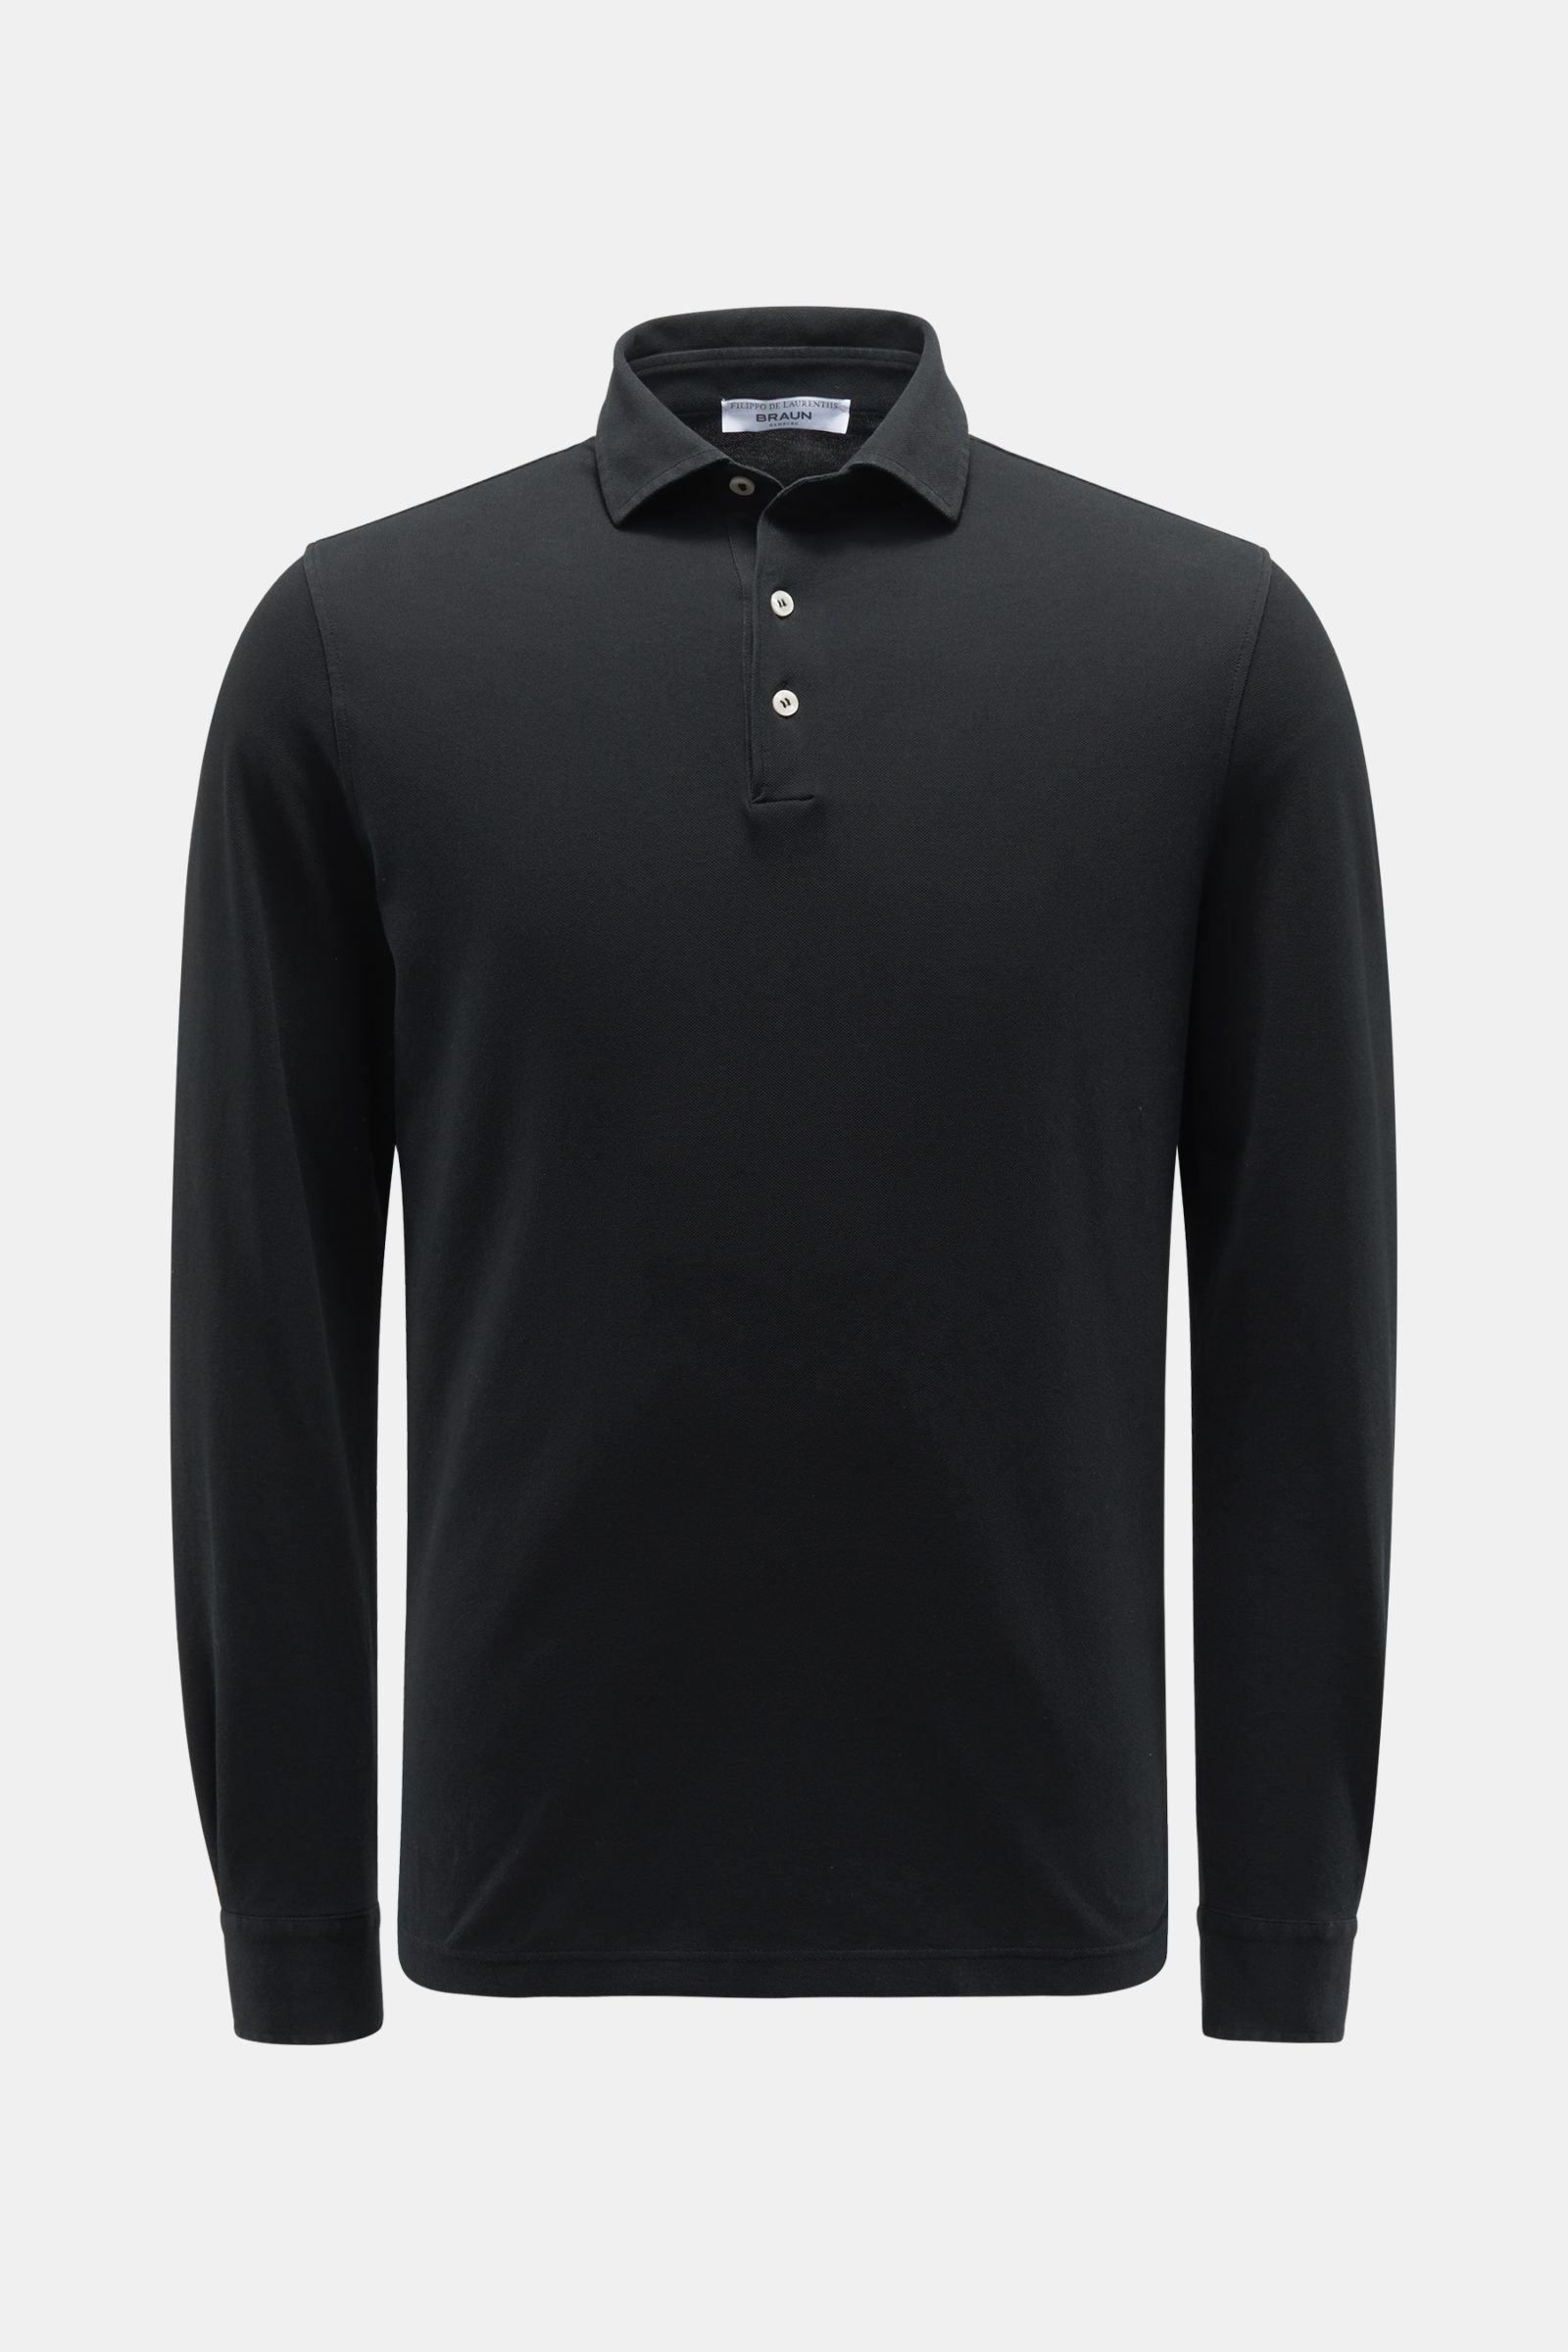 Longsleeve-Poloshirt schwarz